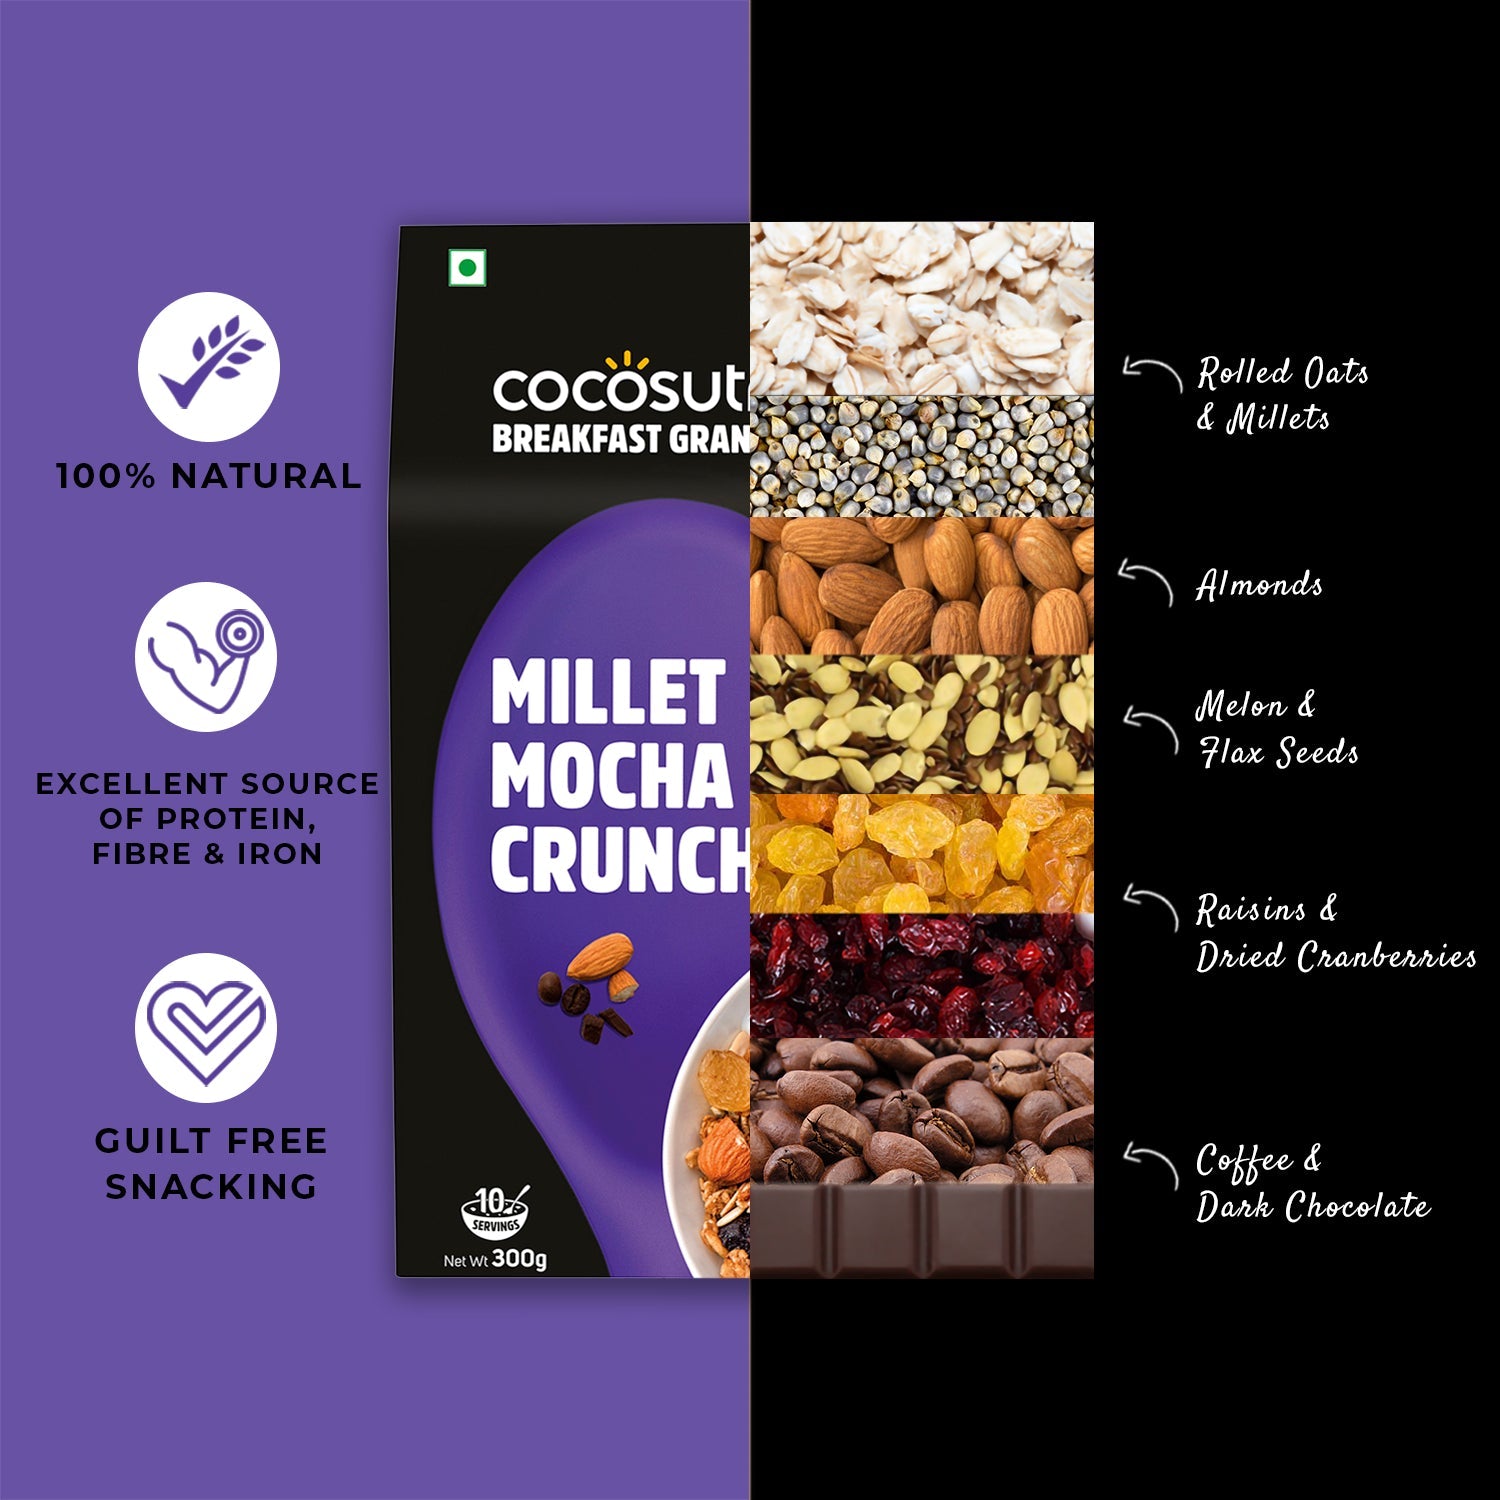 Millet Mocha Crunch Breakfast Granola - Ingredients